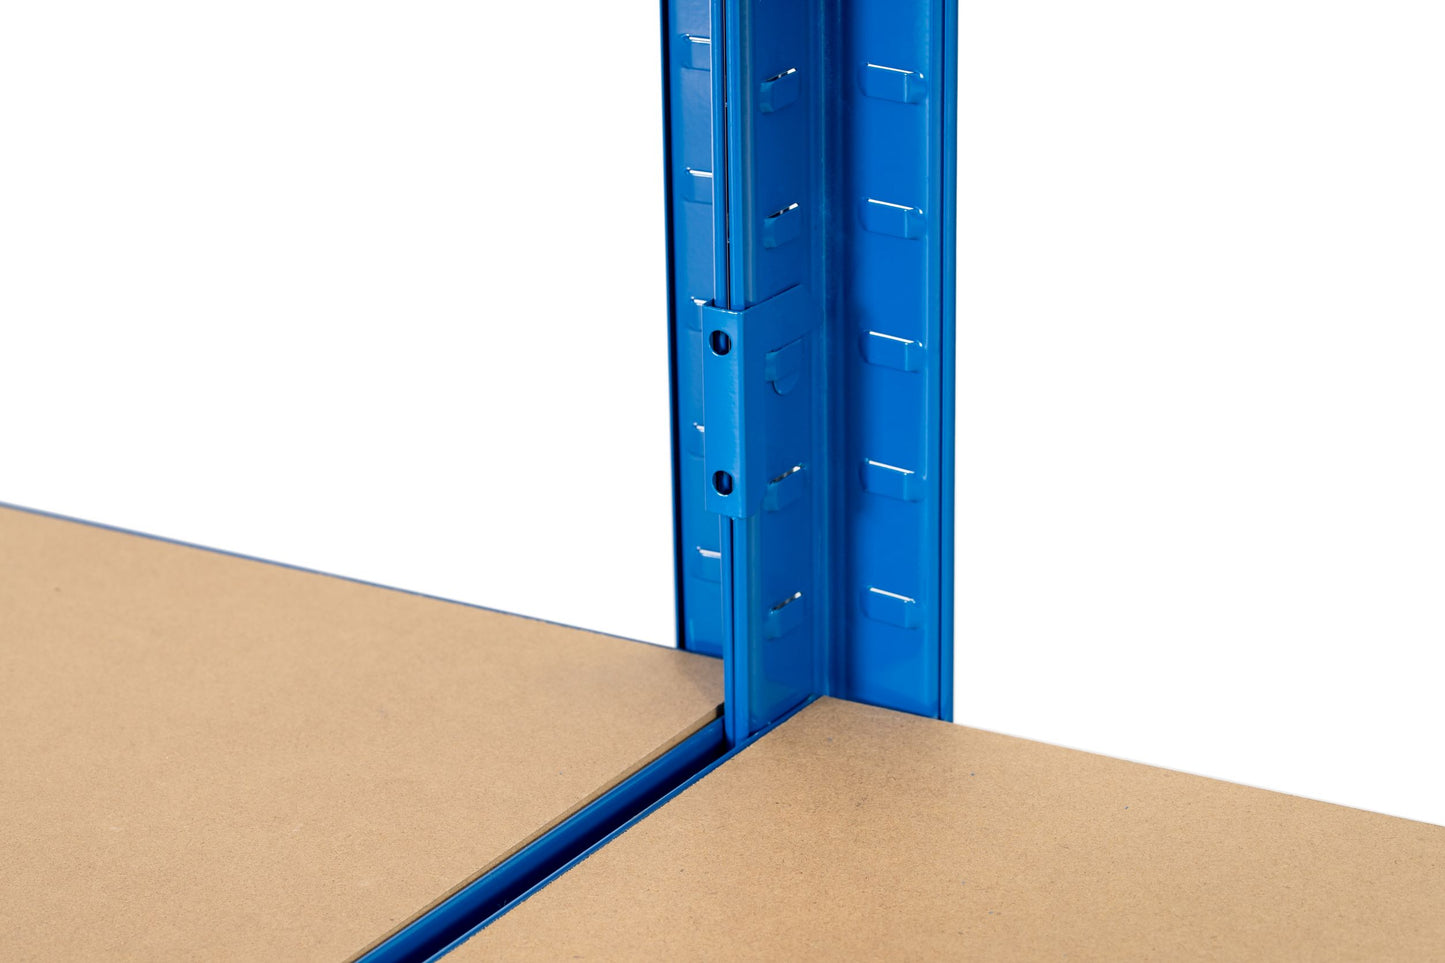 180 x 90 x 60cm | Blue | 5 Tier Boltless Heavy Duty Garage Shelving Unit | 1000kg Load Weight